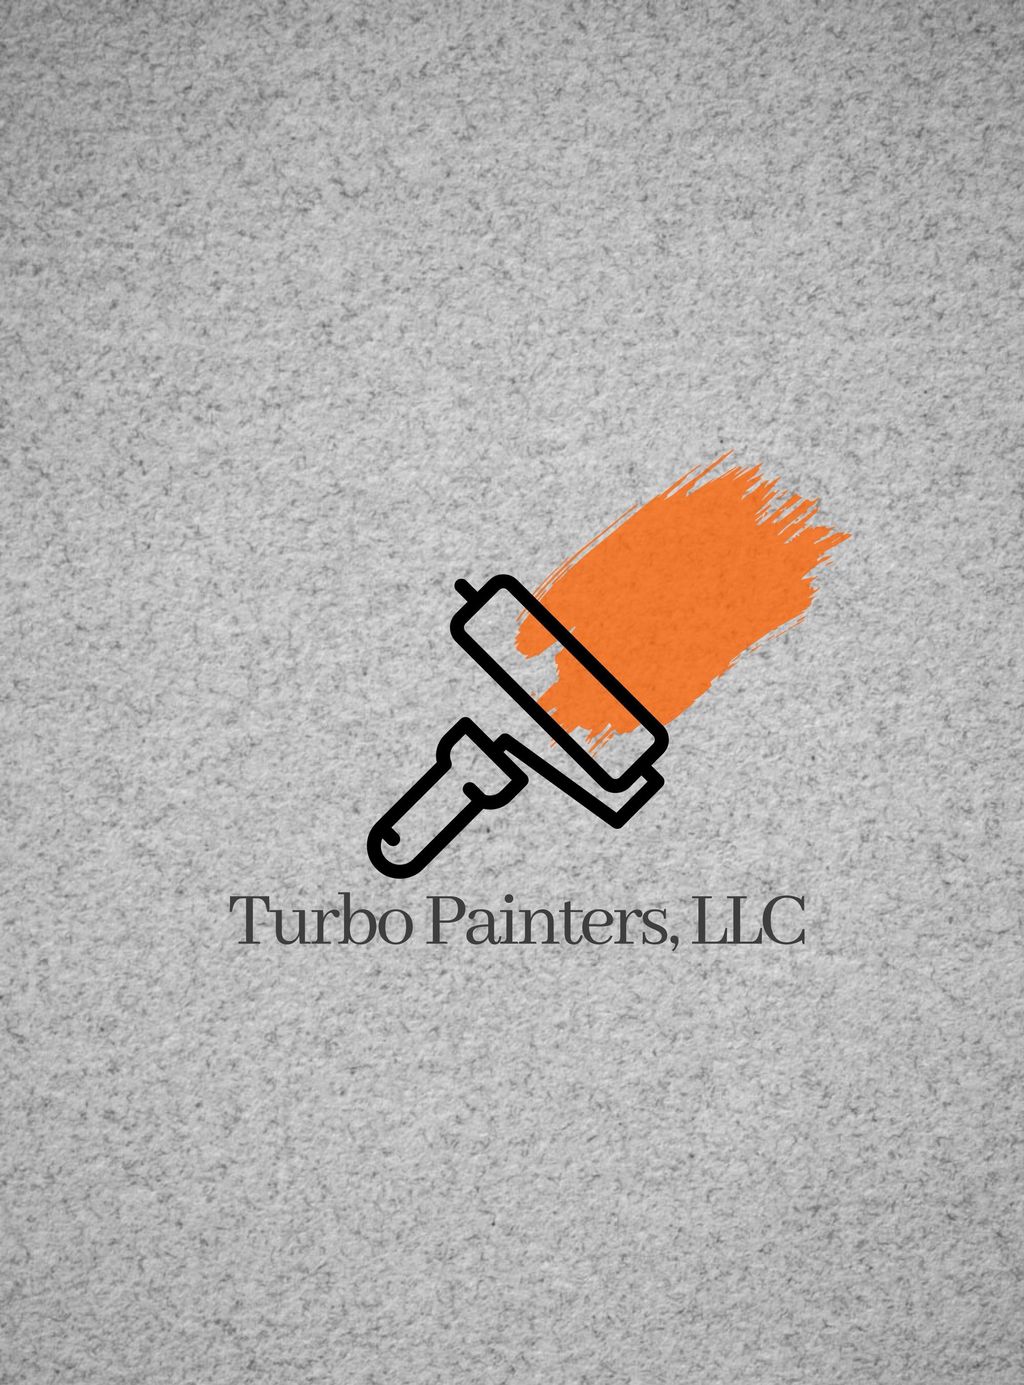 Turbo Painters